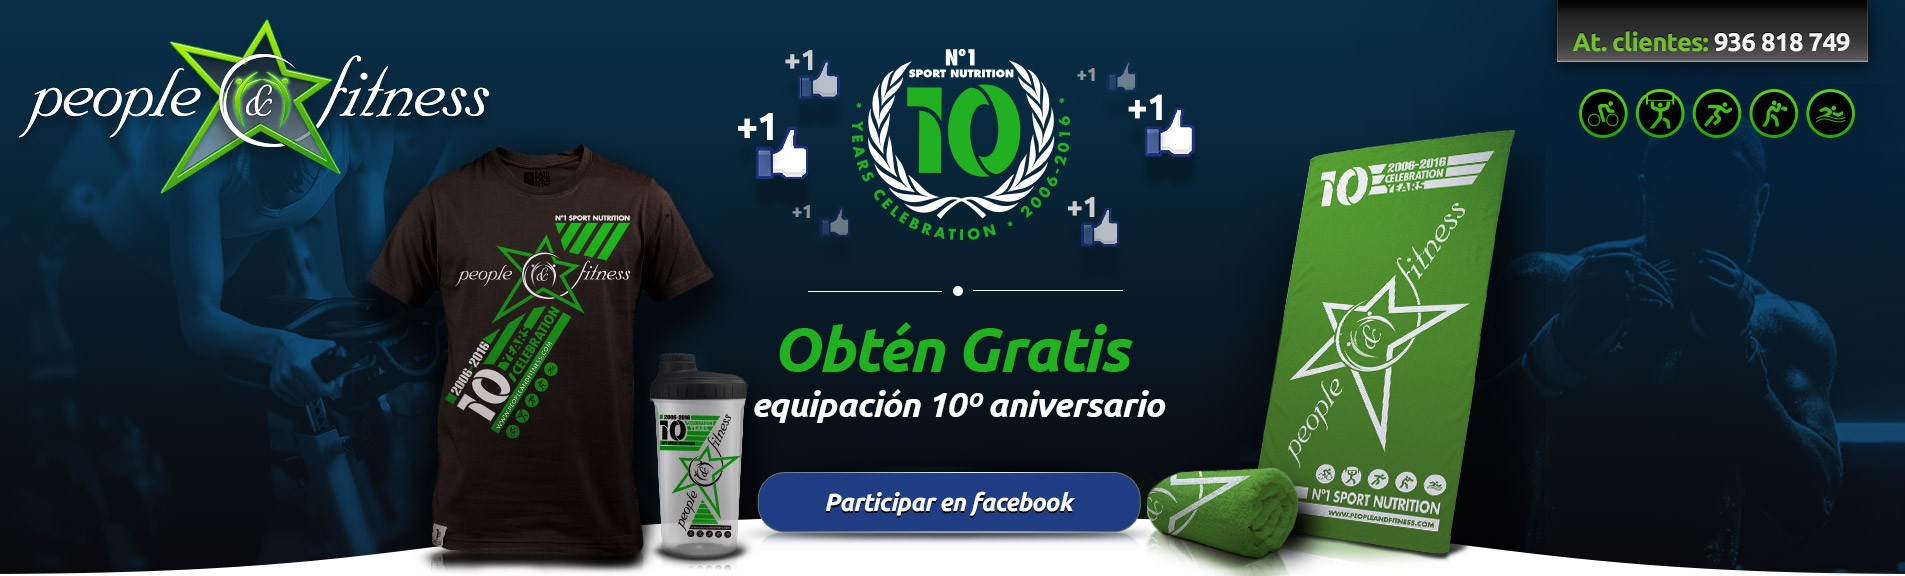 Campaña facebook 10 aniversario people and fitness